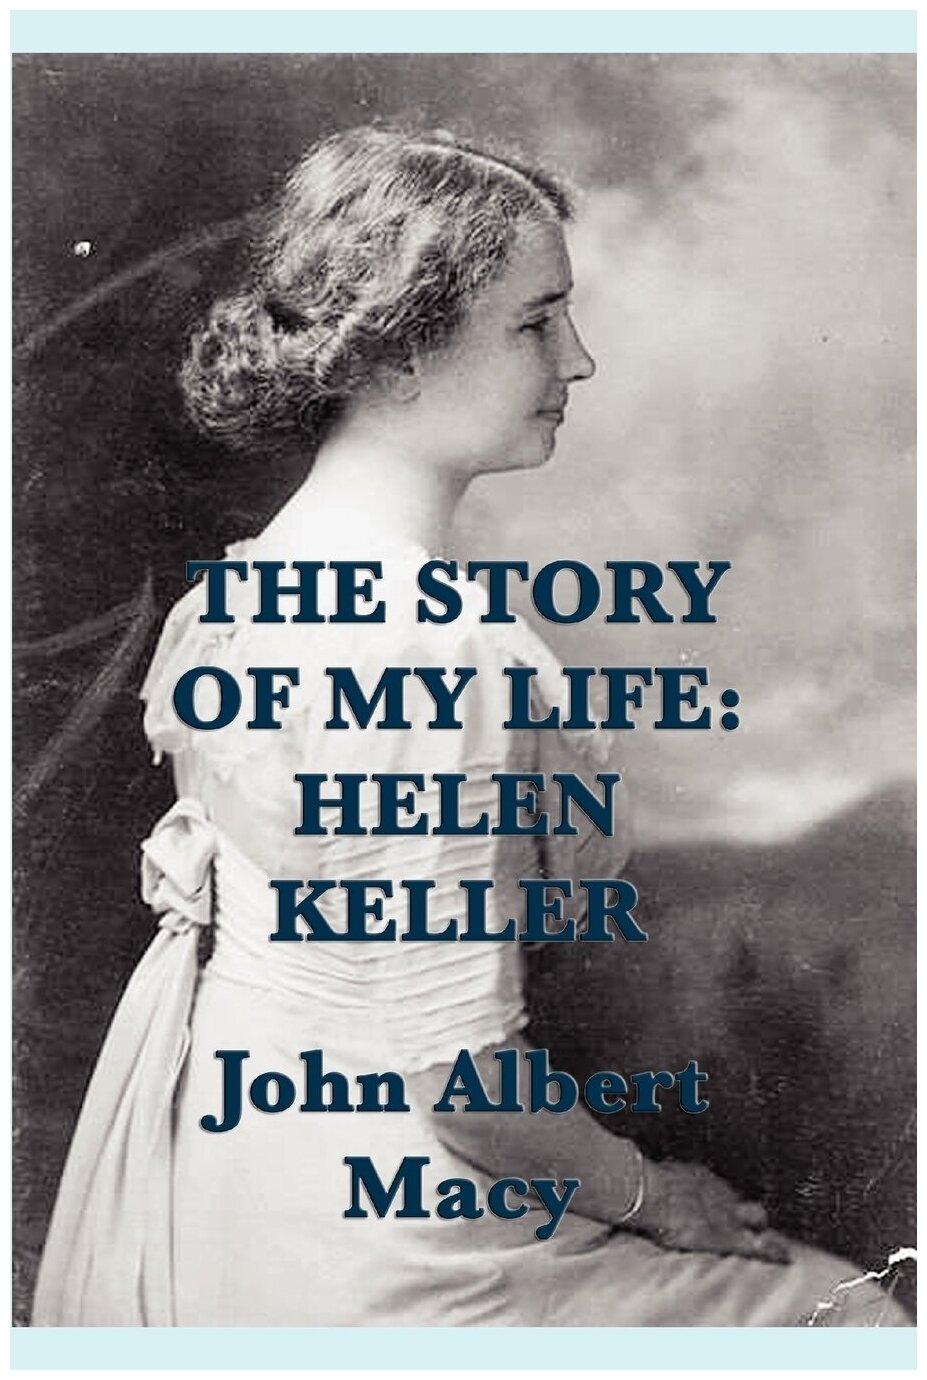 The Story of my Life. Helen Keller